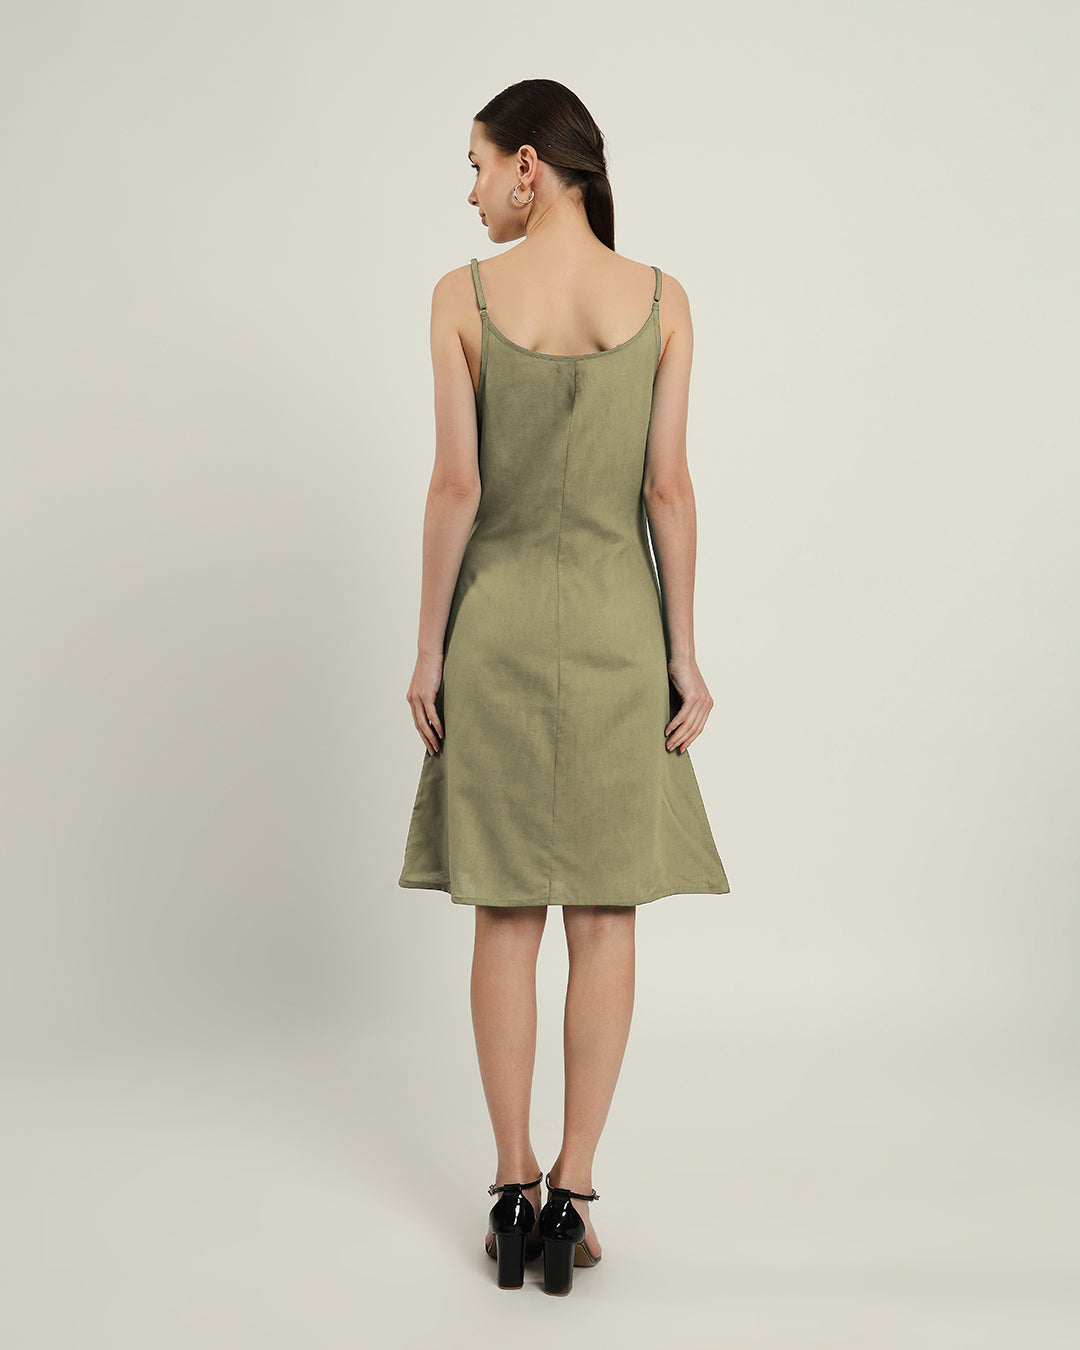 The Chambéry Daisy Olive Linen Dress